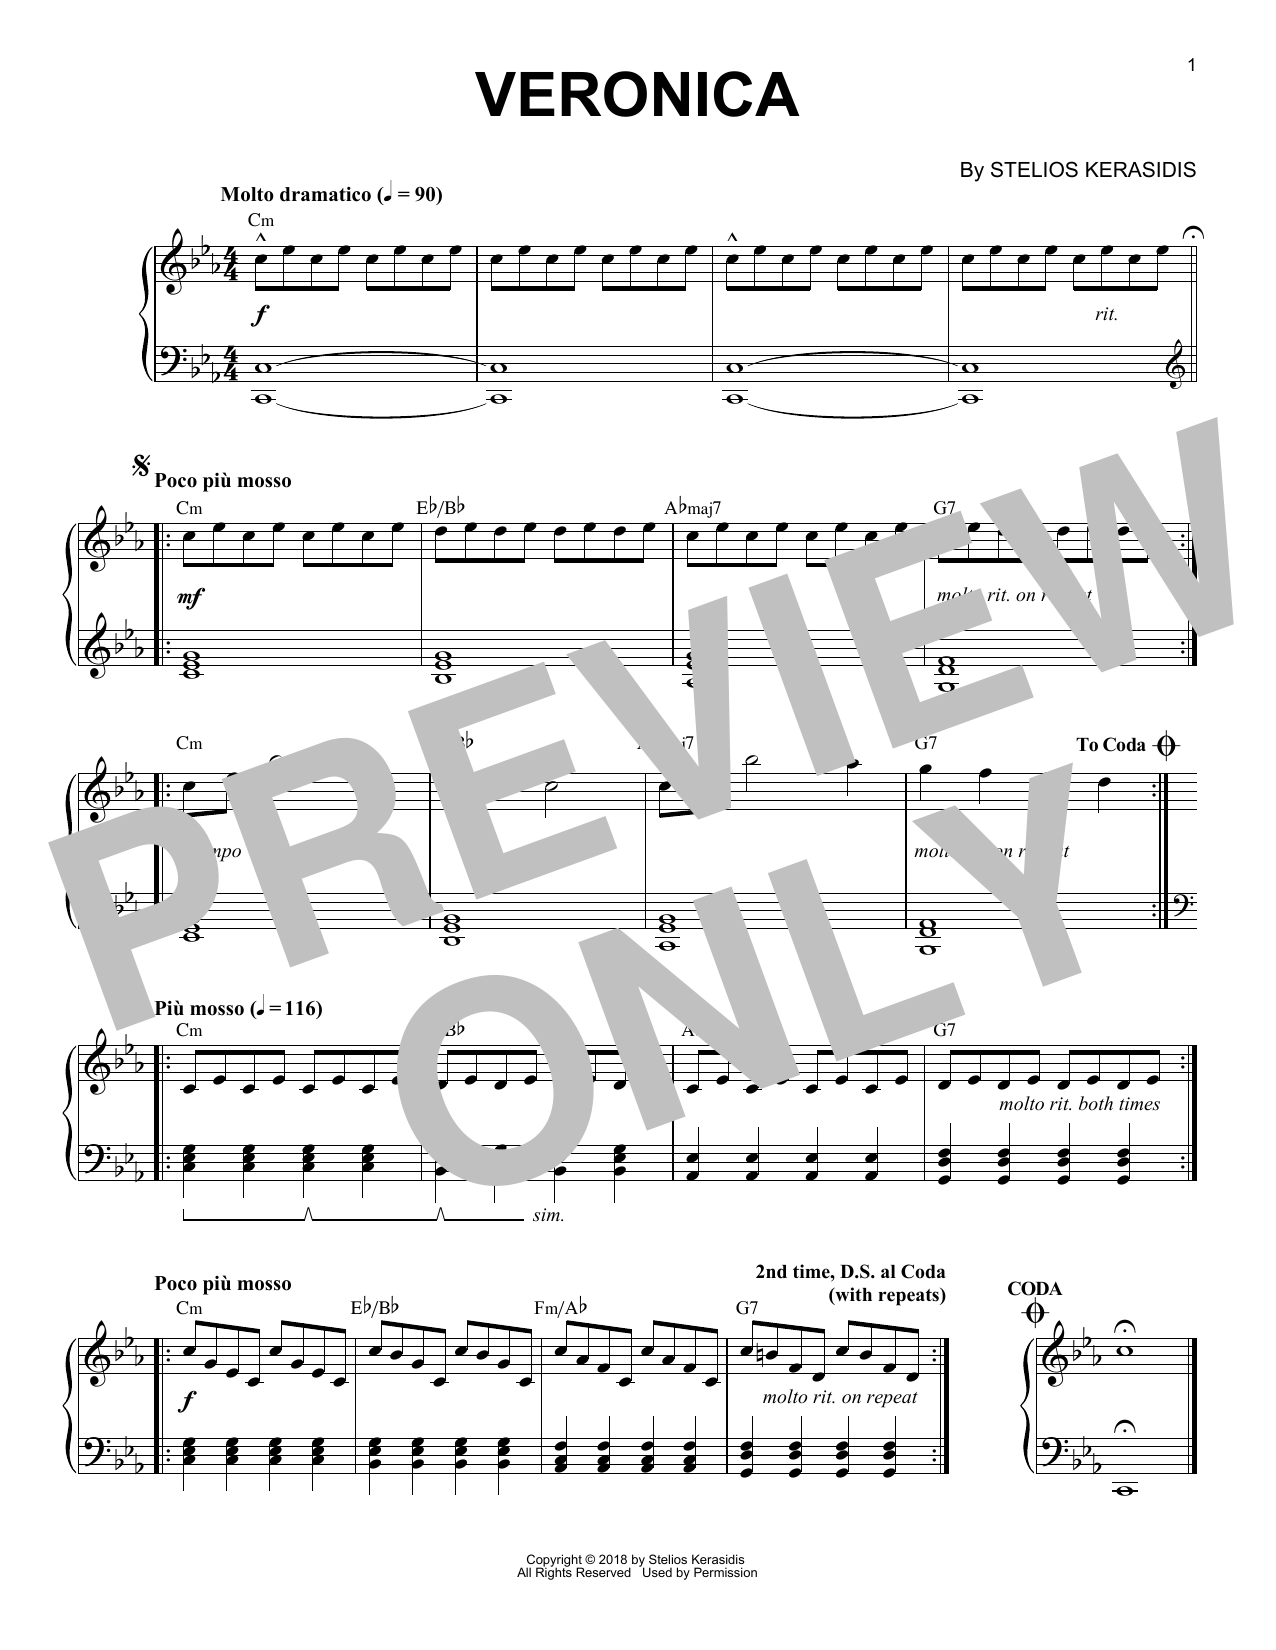 Stelios Kerasidis Veronica Sheet Music Notes & Chords for Piano Solo - Download or Print PDF